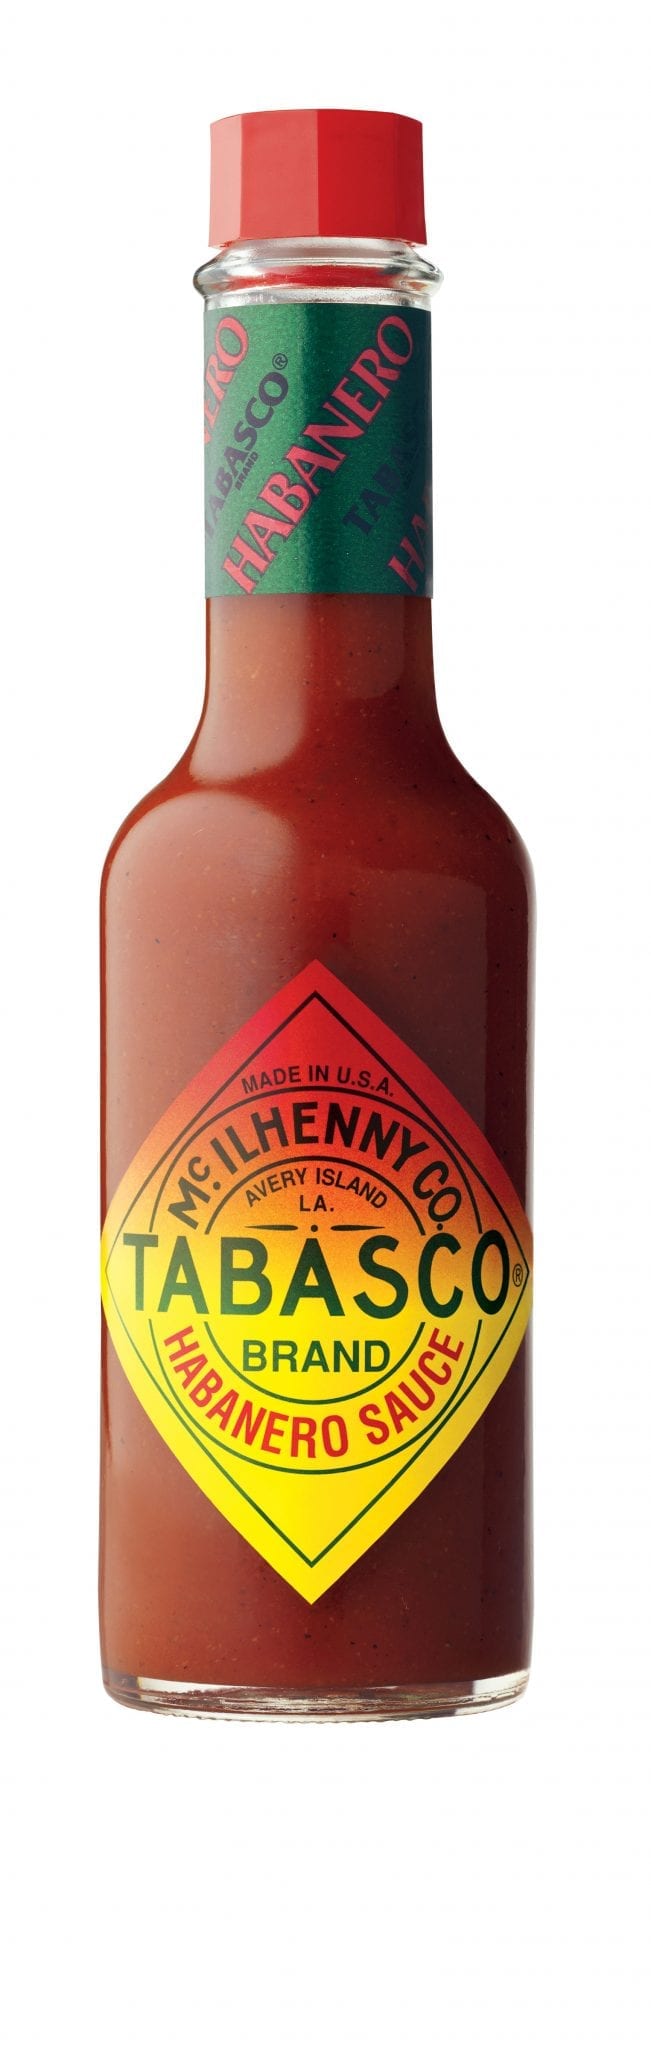 Tabasco Brand Habanero Sauce